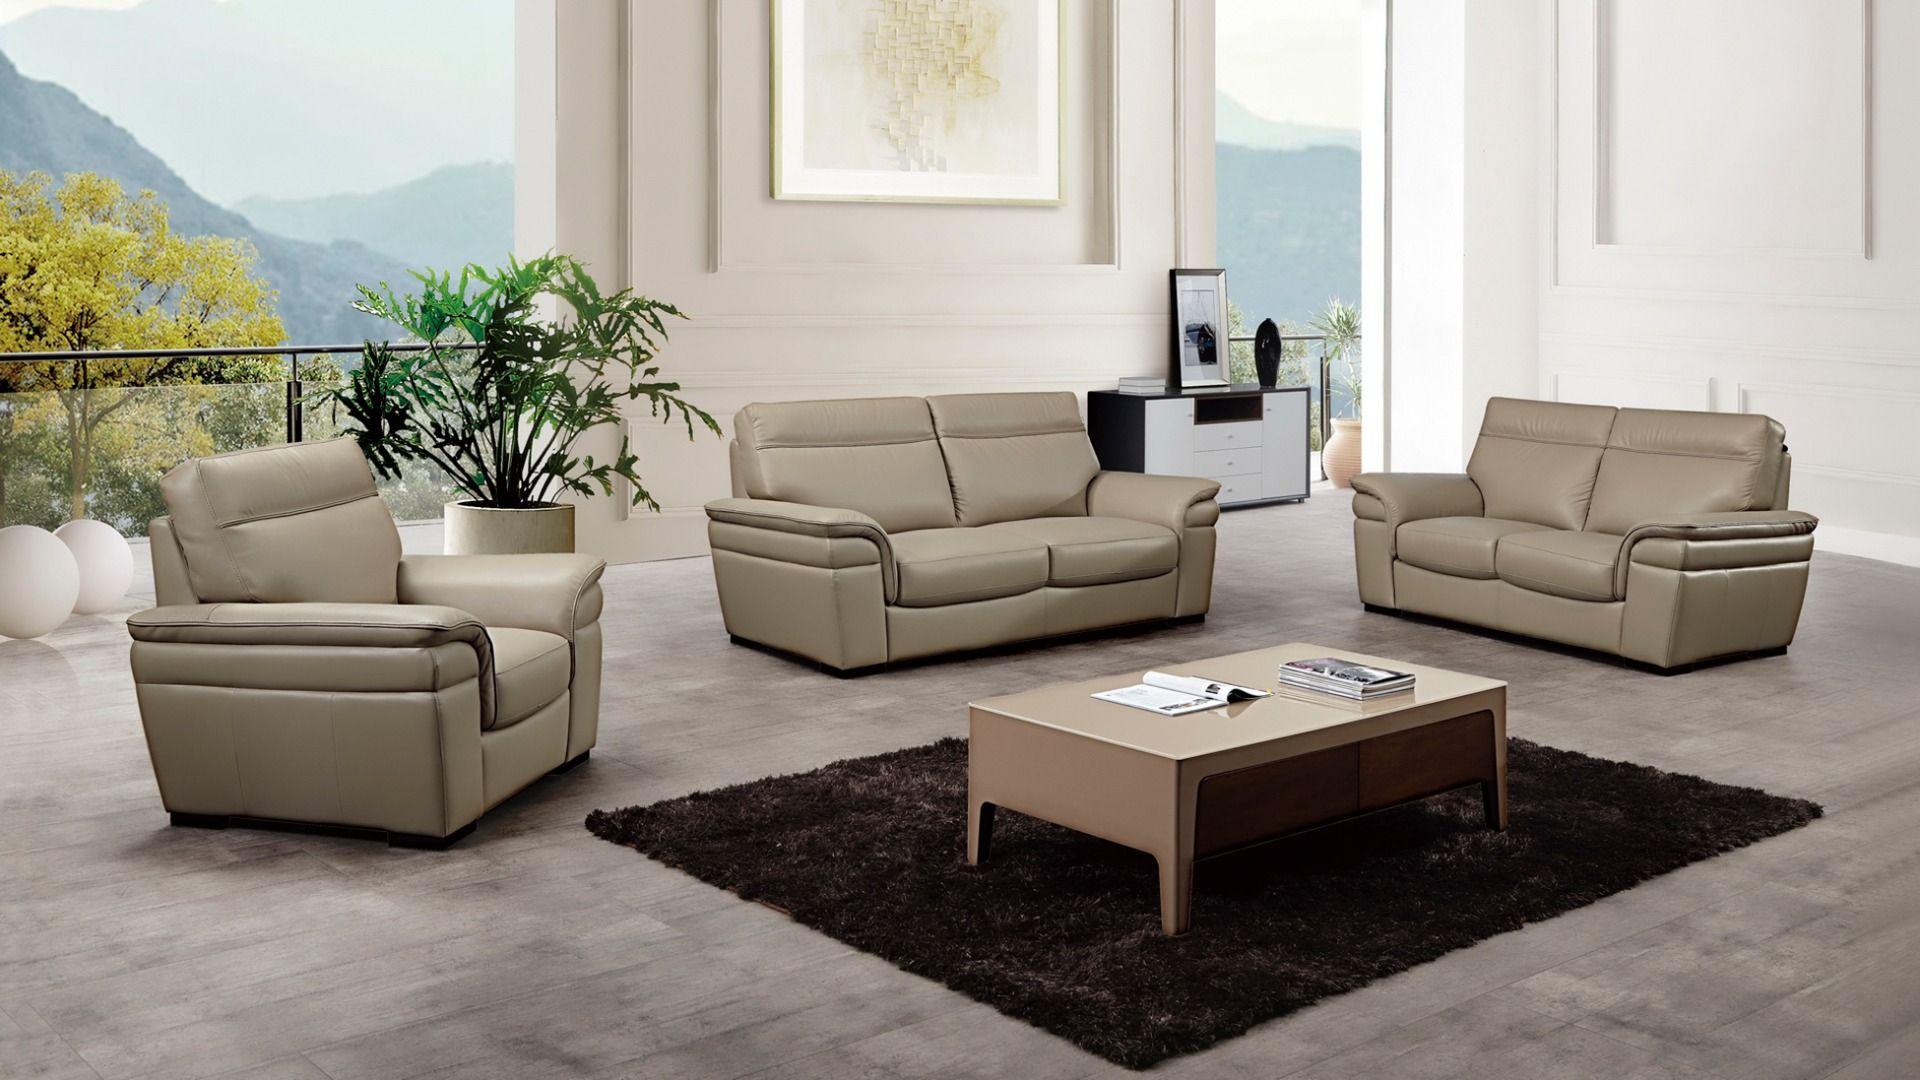 Contemporary, Modern Sofa Set EK020-TAN EK020-TAN Set-3 in Tan Italian Leather